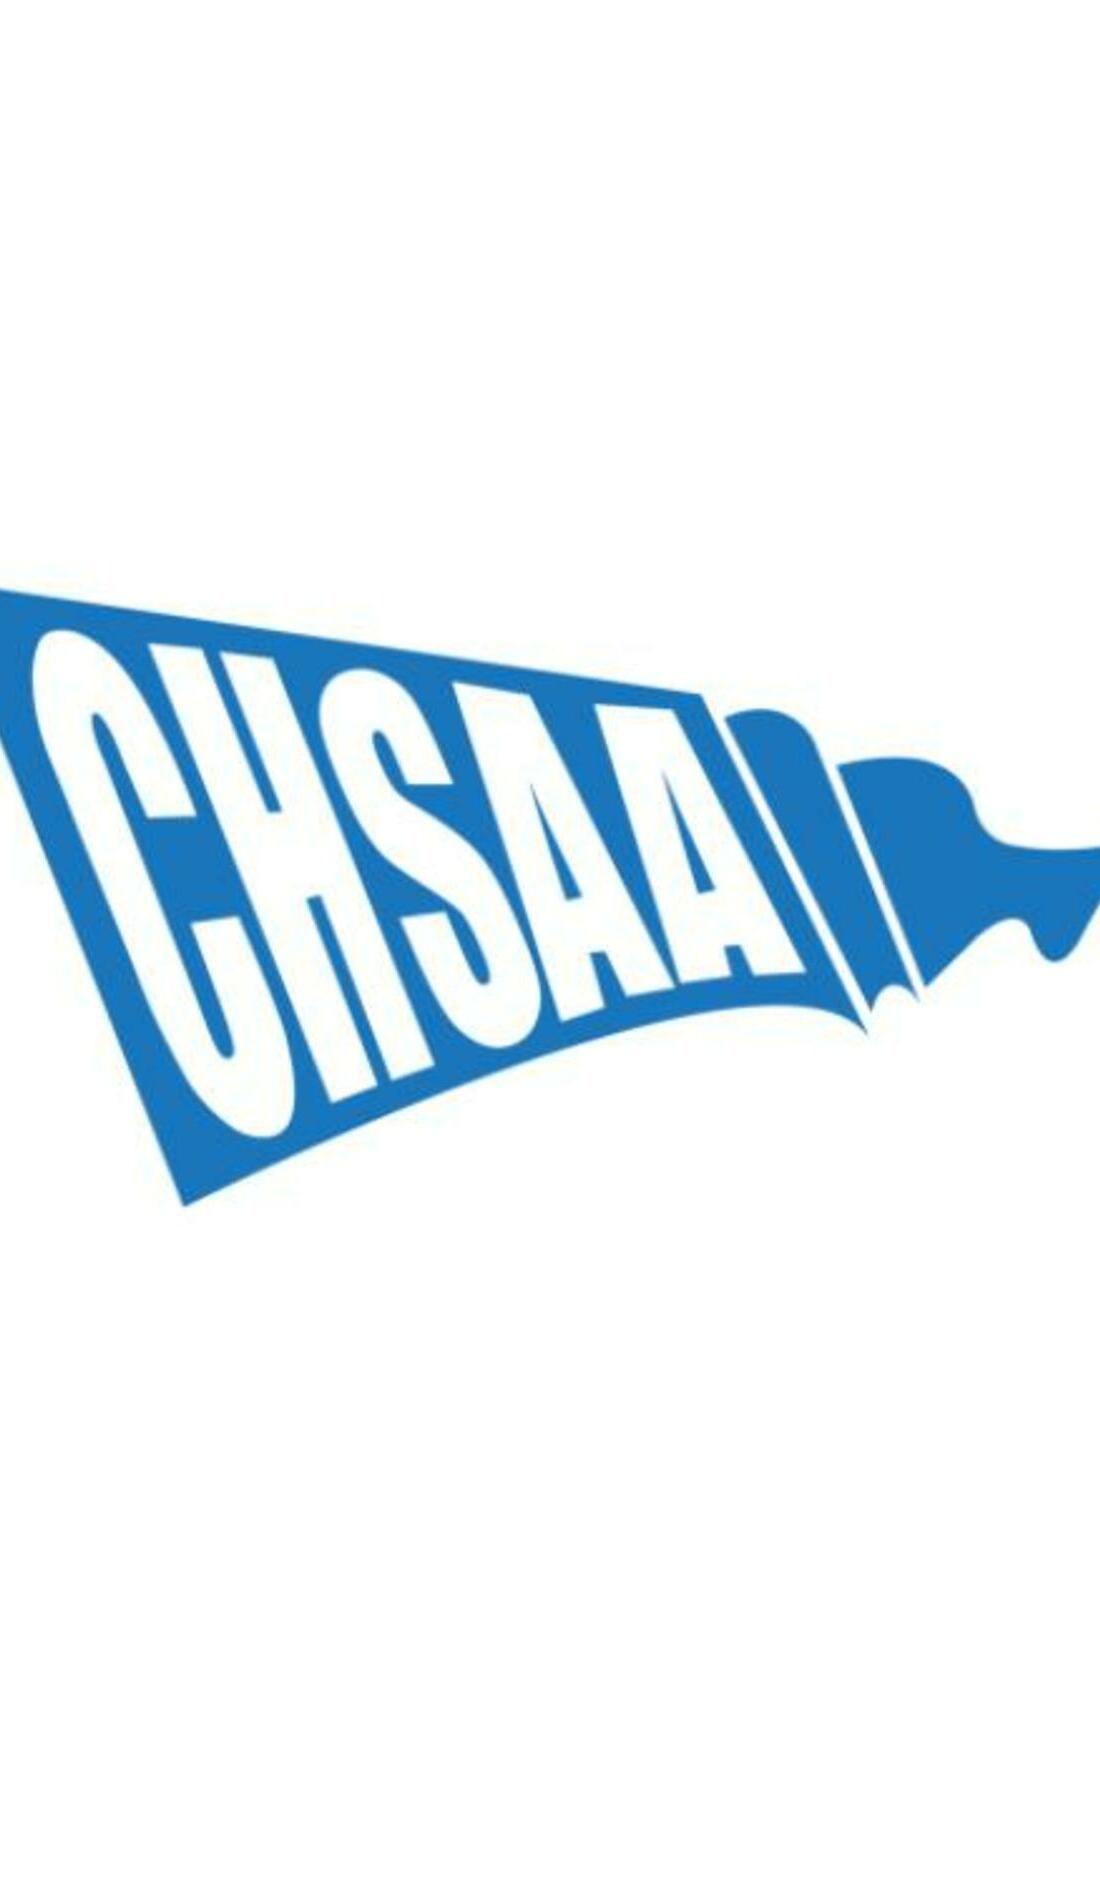 A 2021 CHSAA Soccer live event